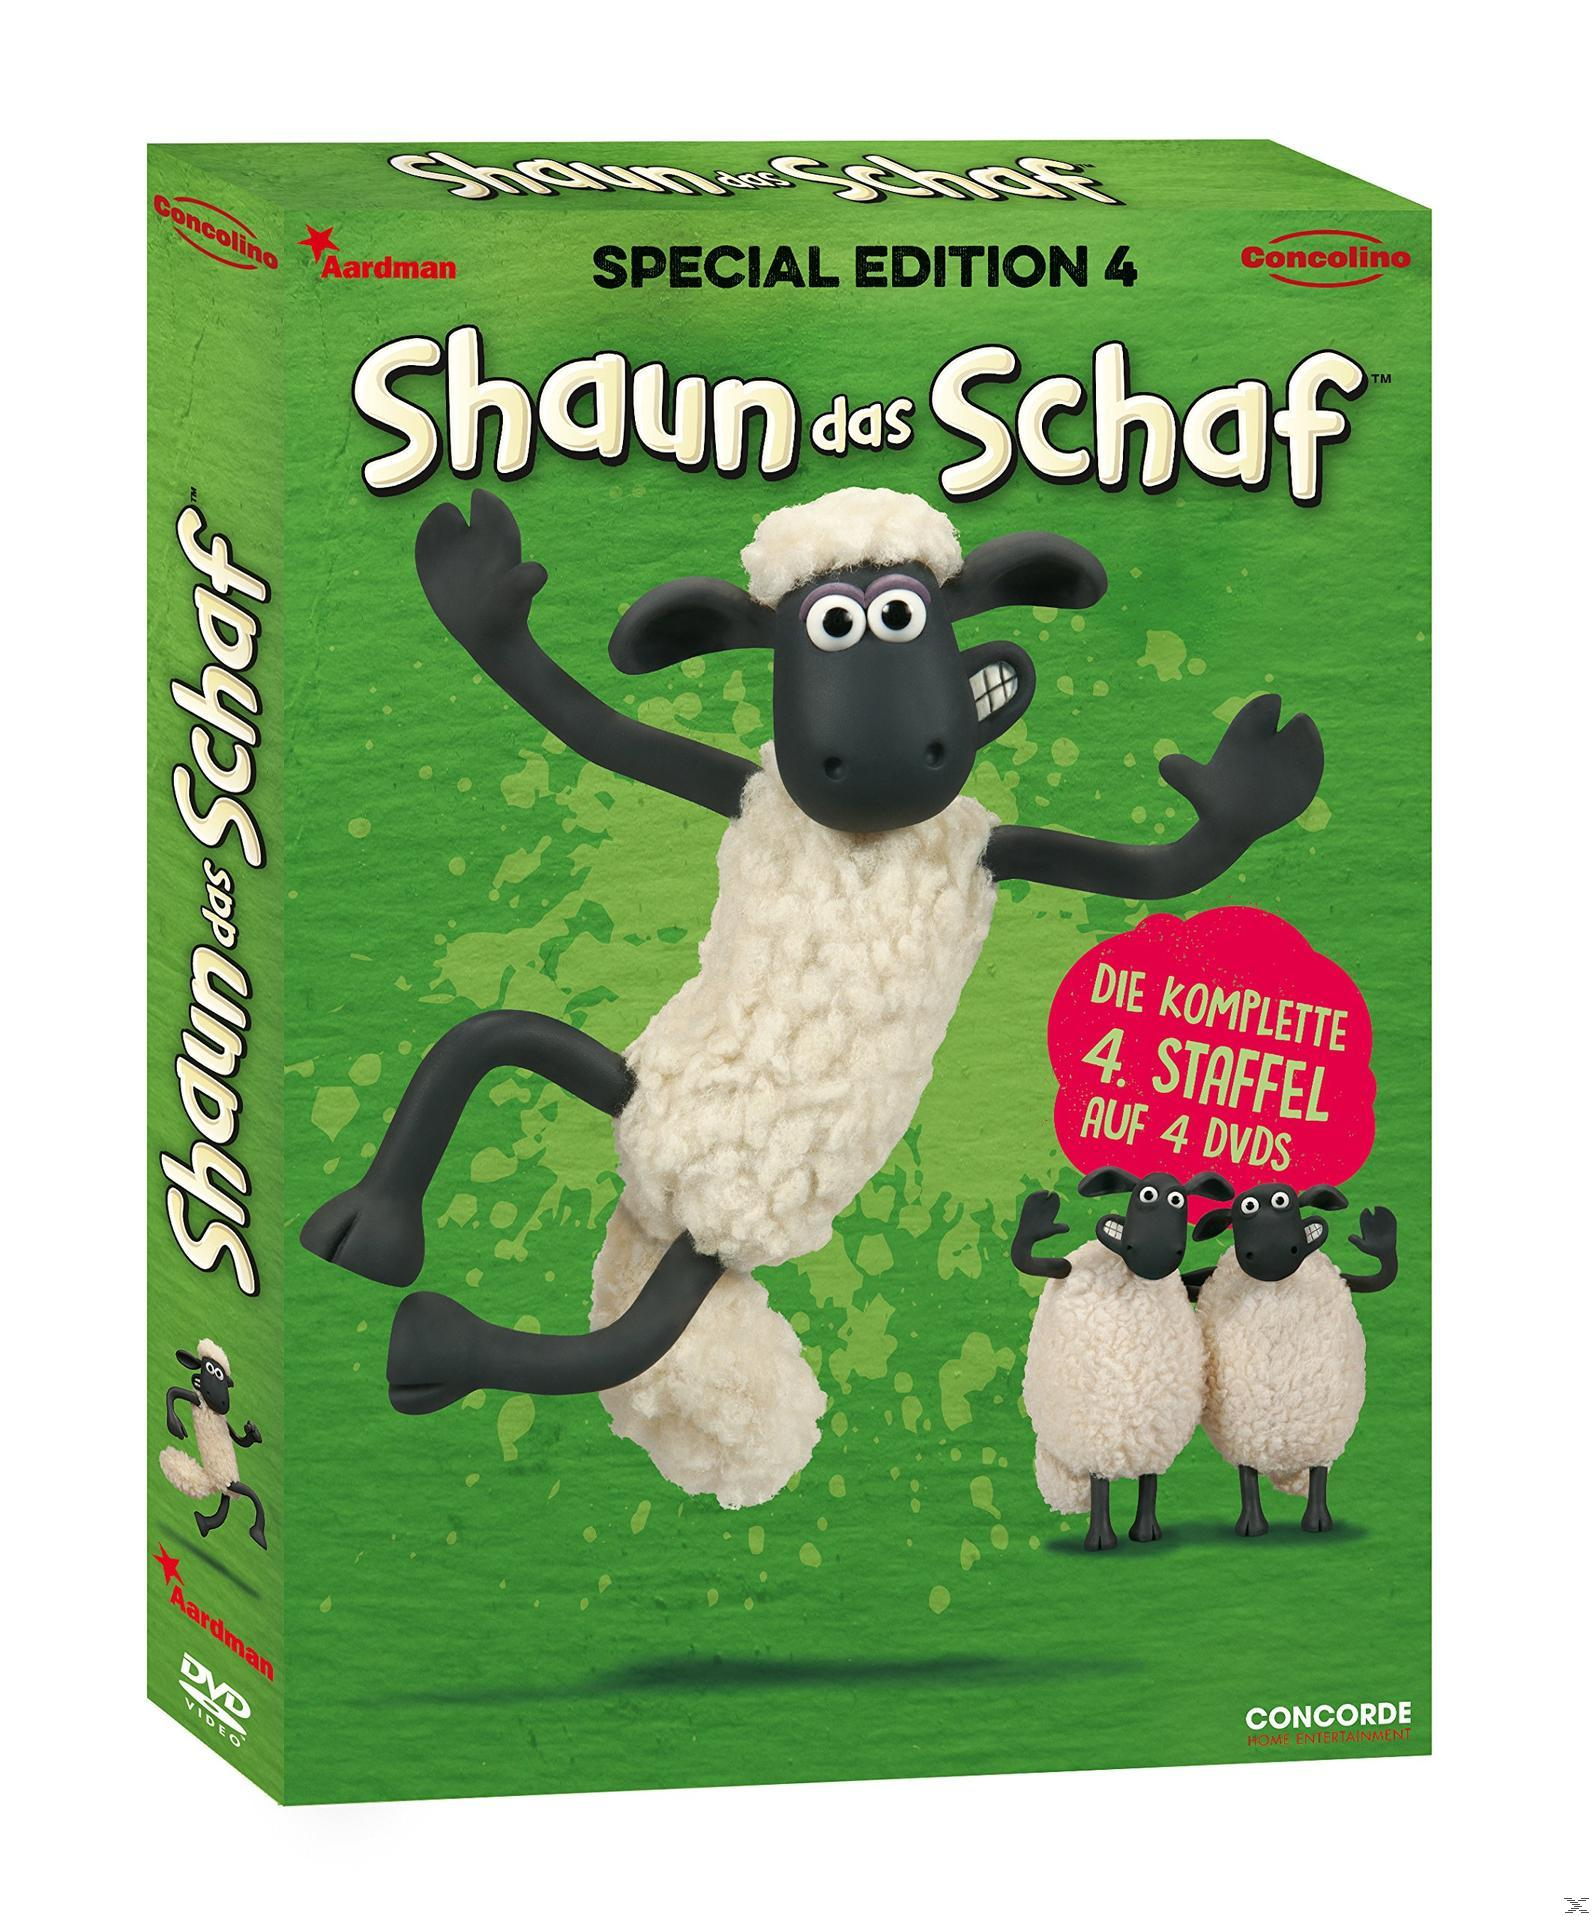 Shaun Edition 4 - Schaf das DVD Special